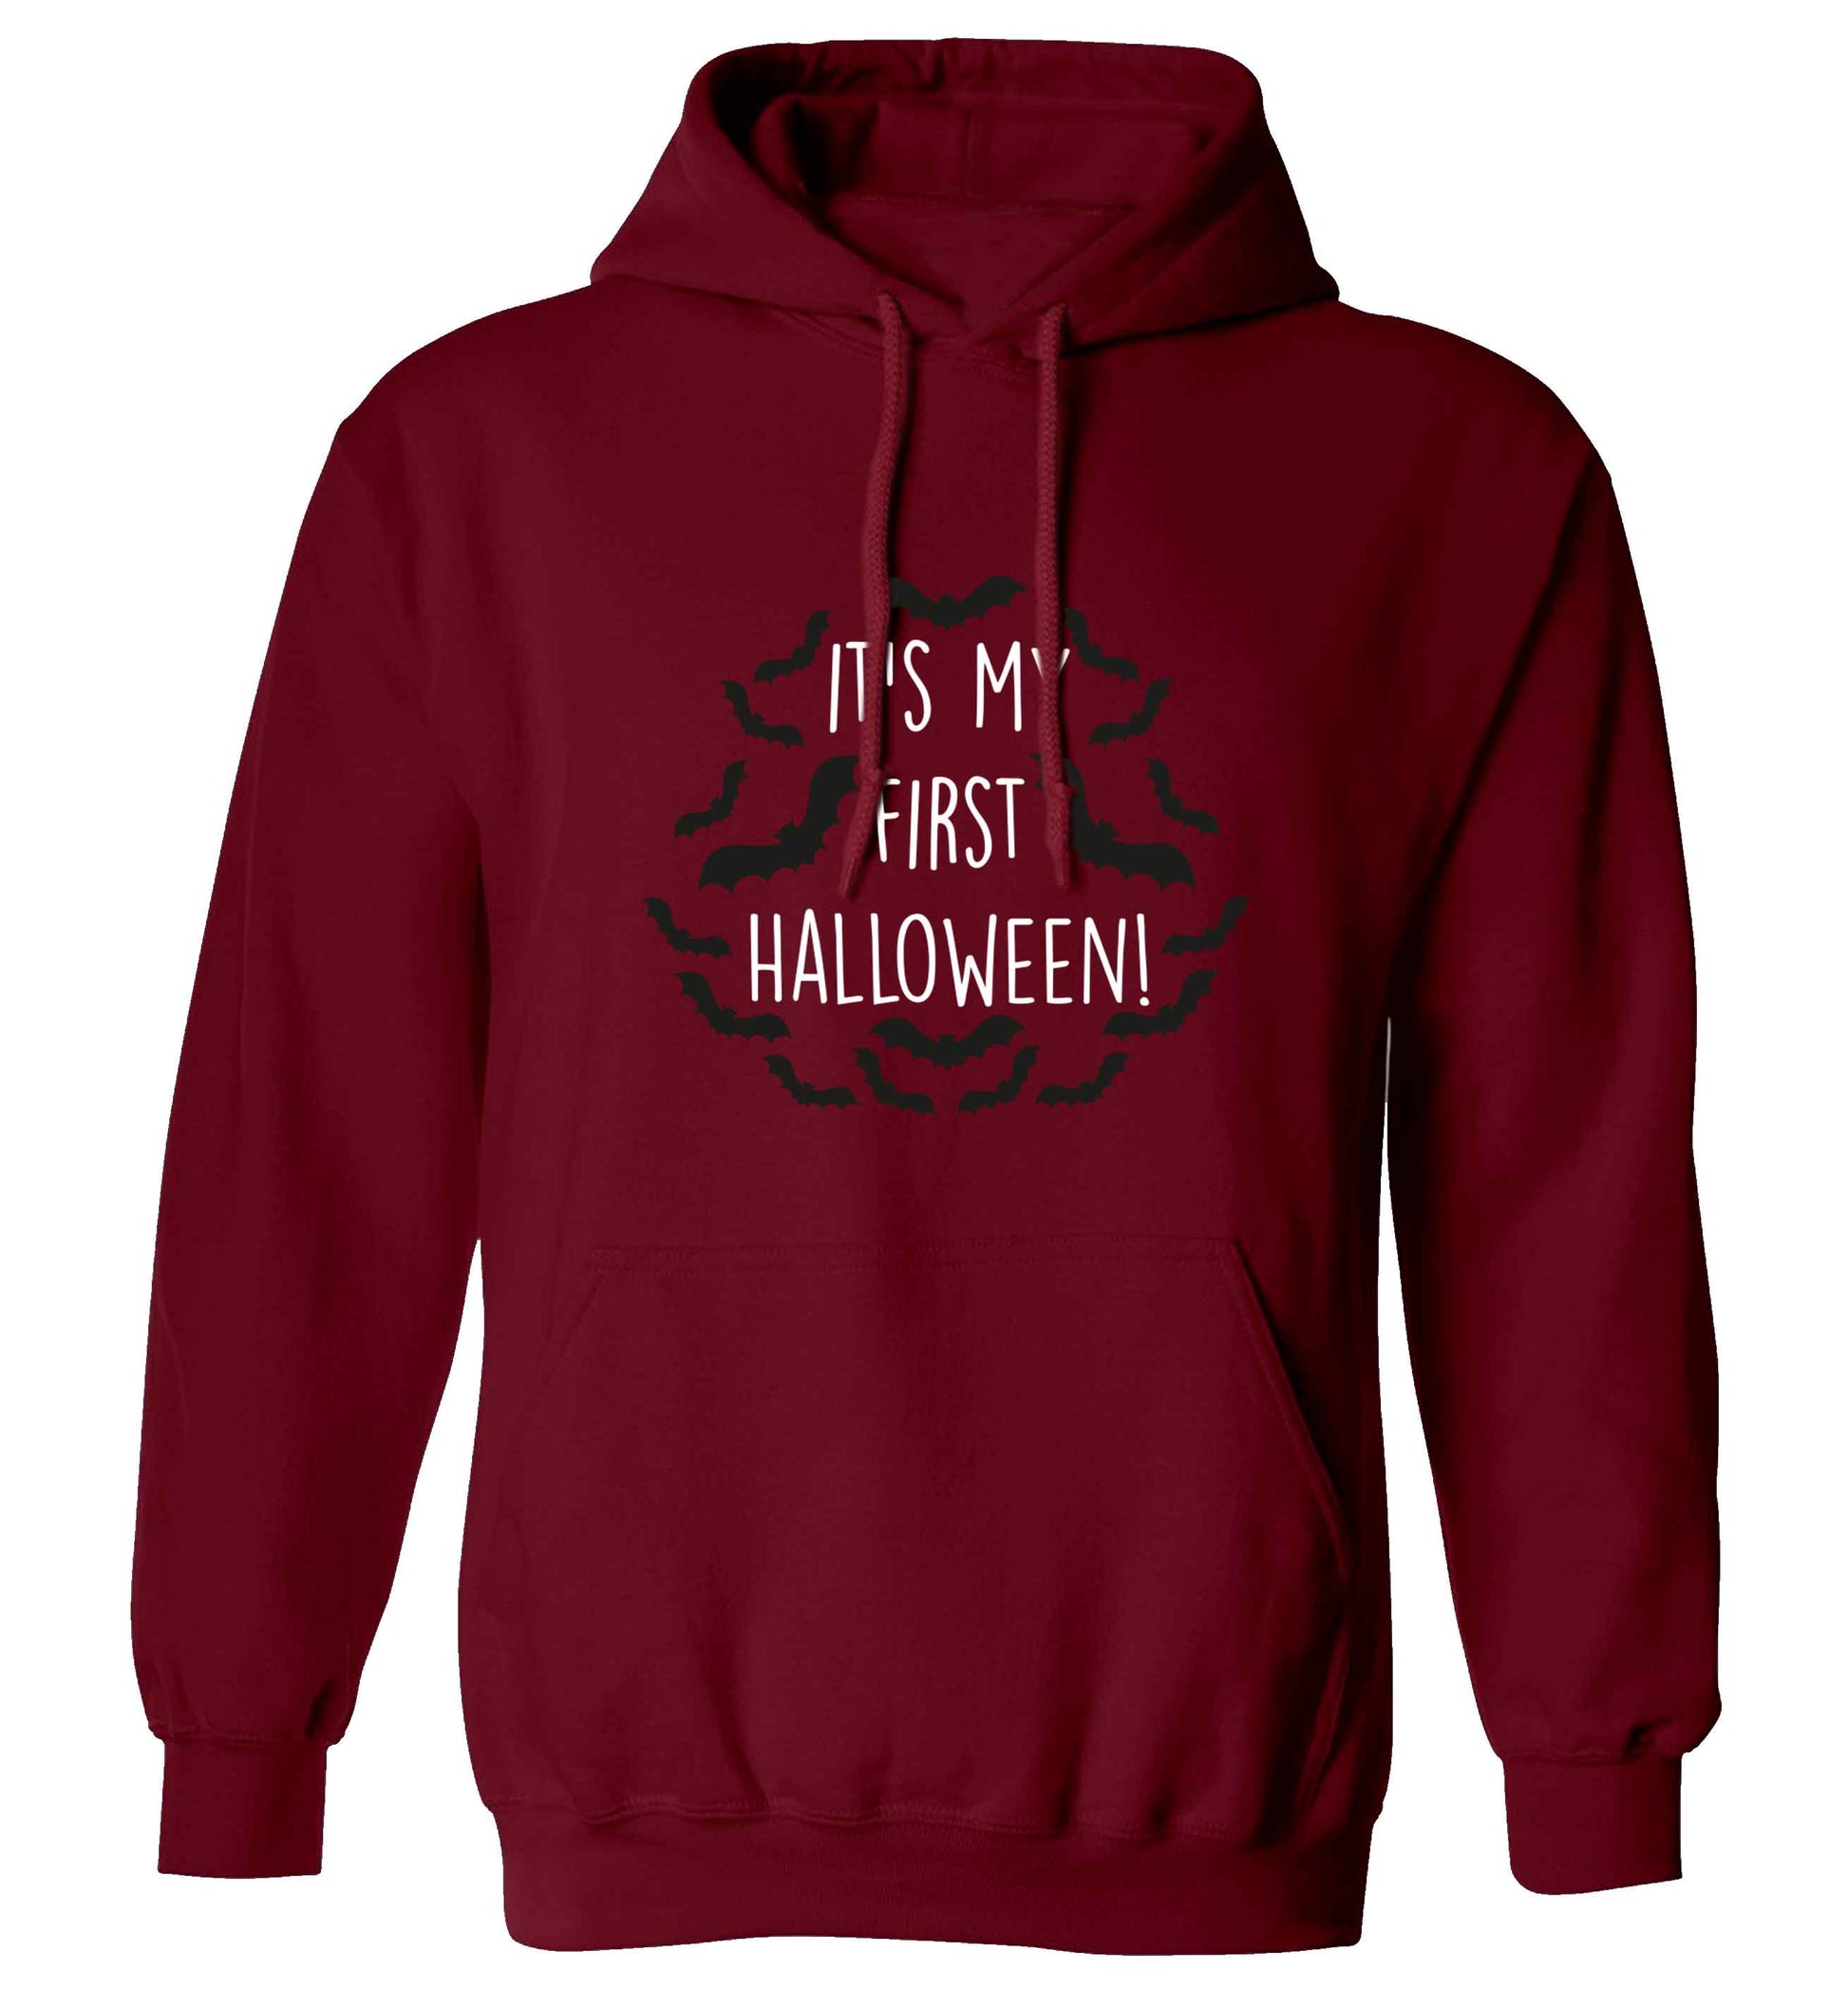 It's my first halloween - bat border adults unisex maroon hoodie 2XL